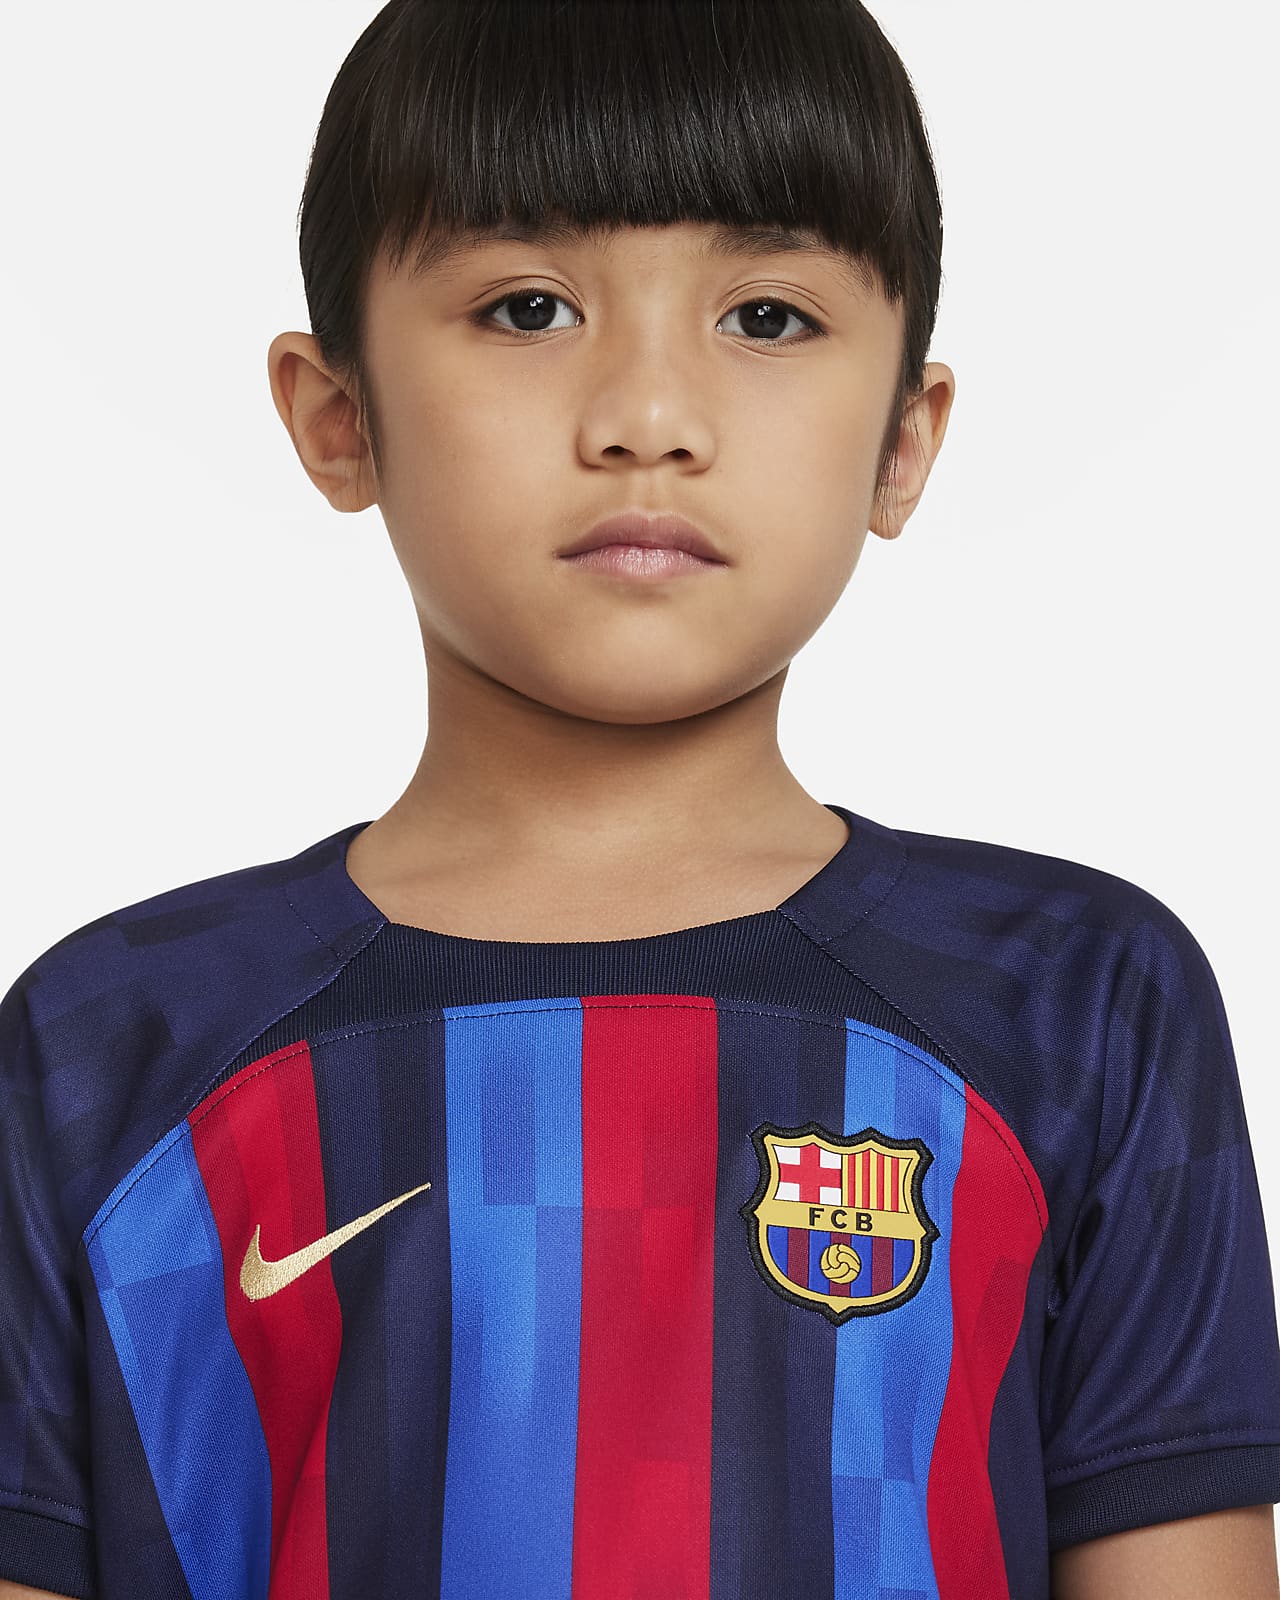 Kit de fútbol del FC local 2022/23 para niños de preescolar. Nike .com